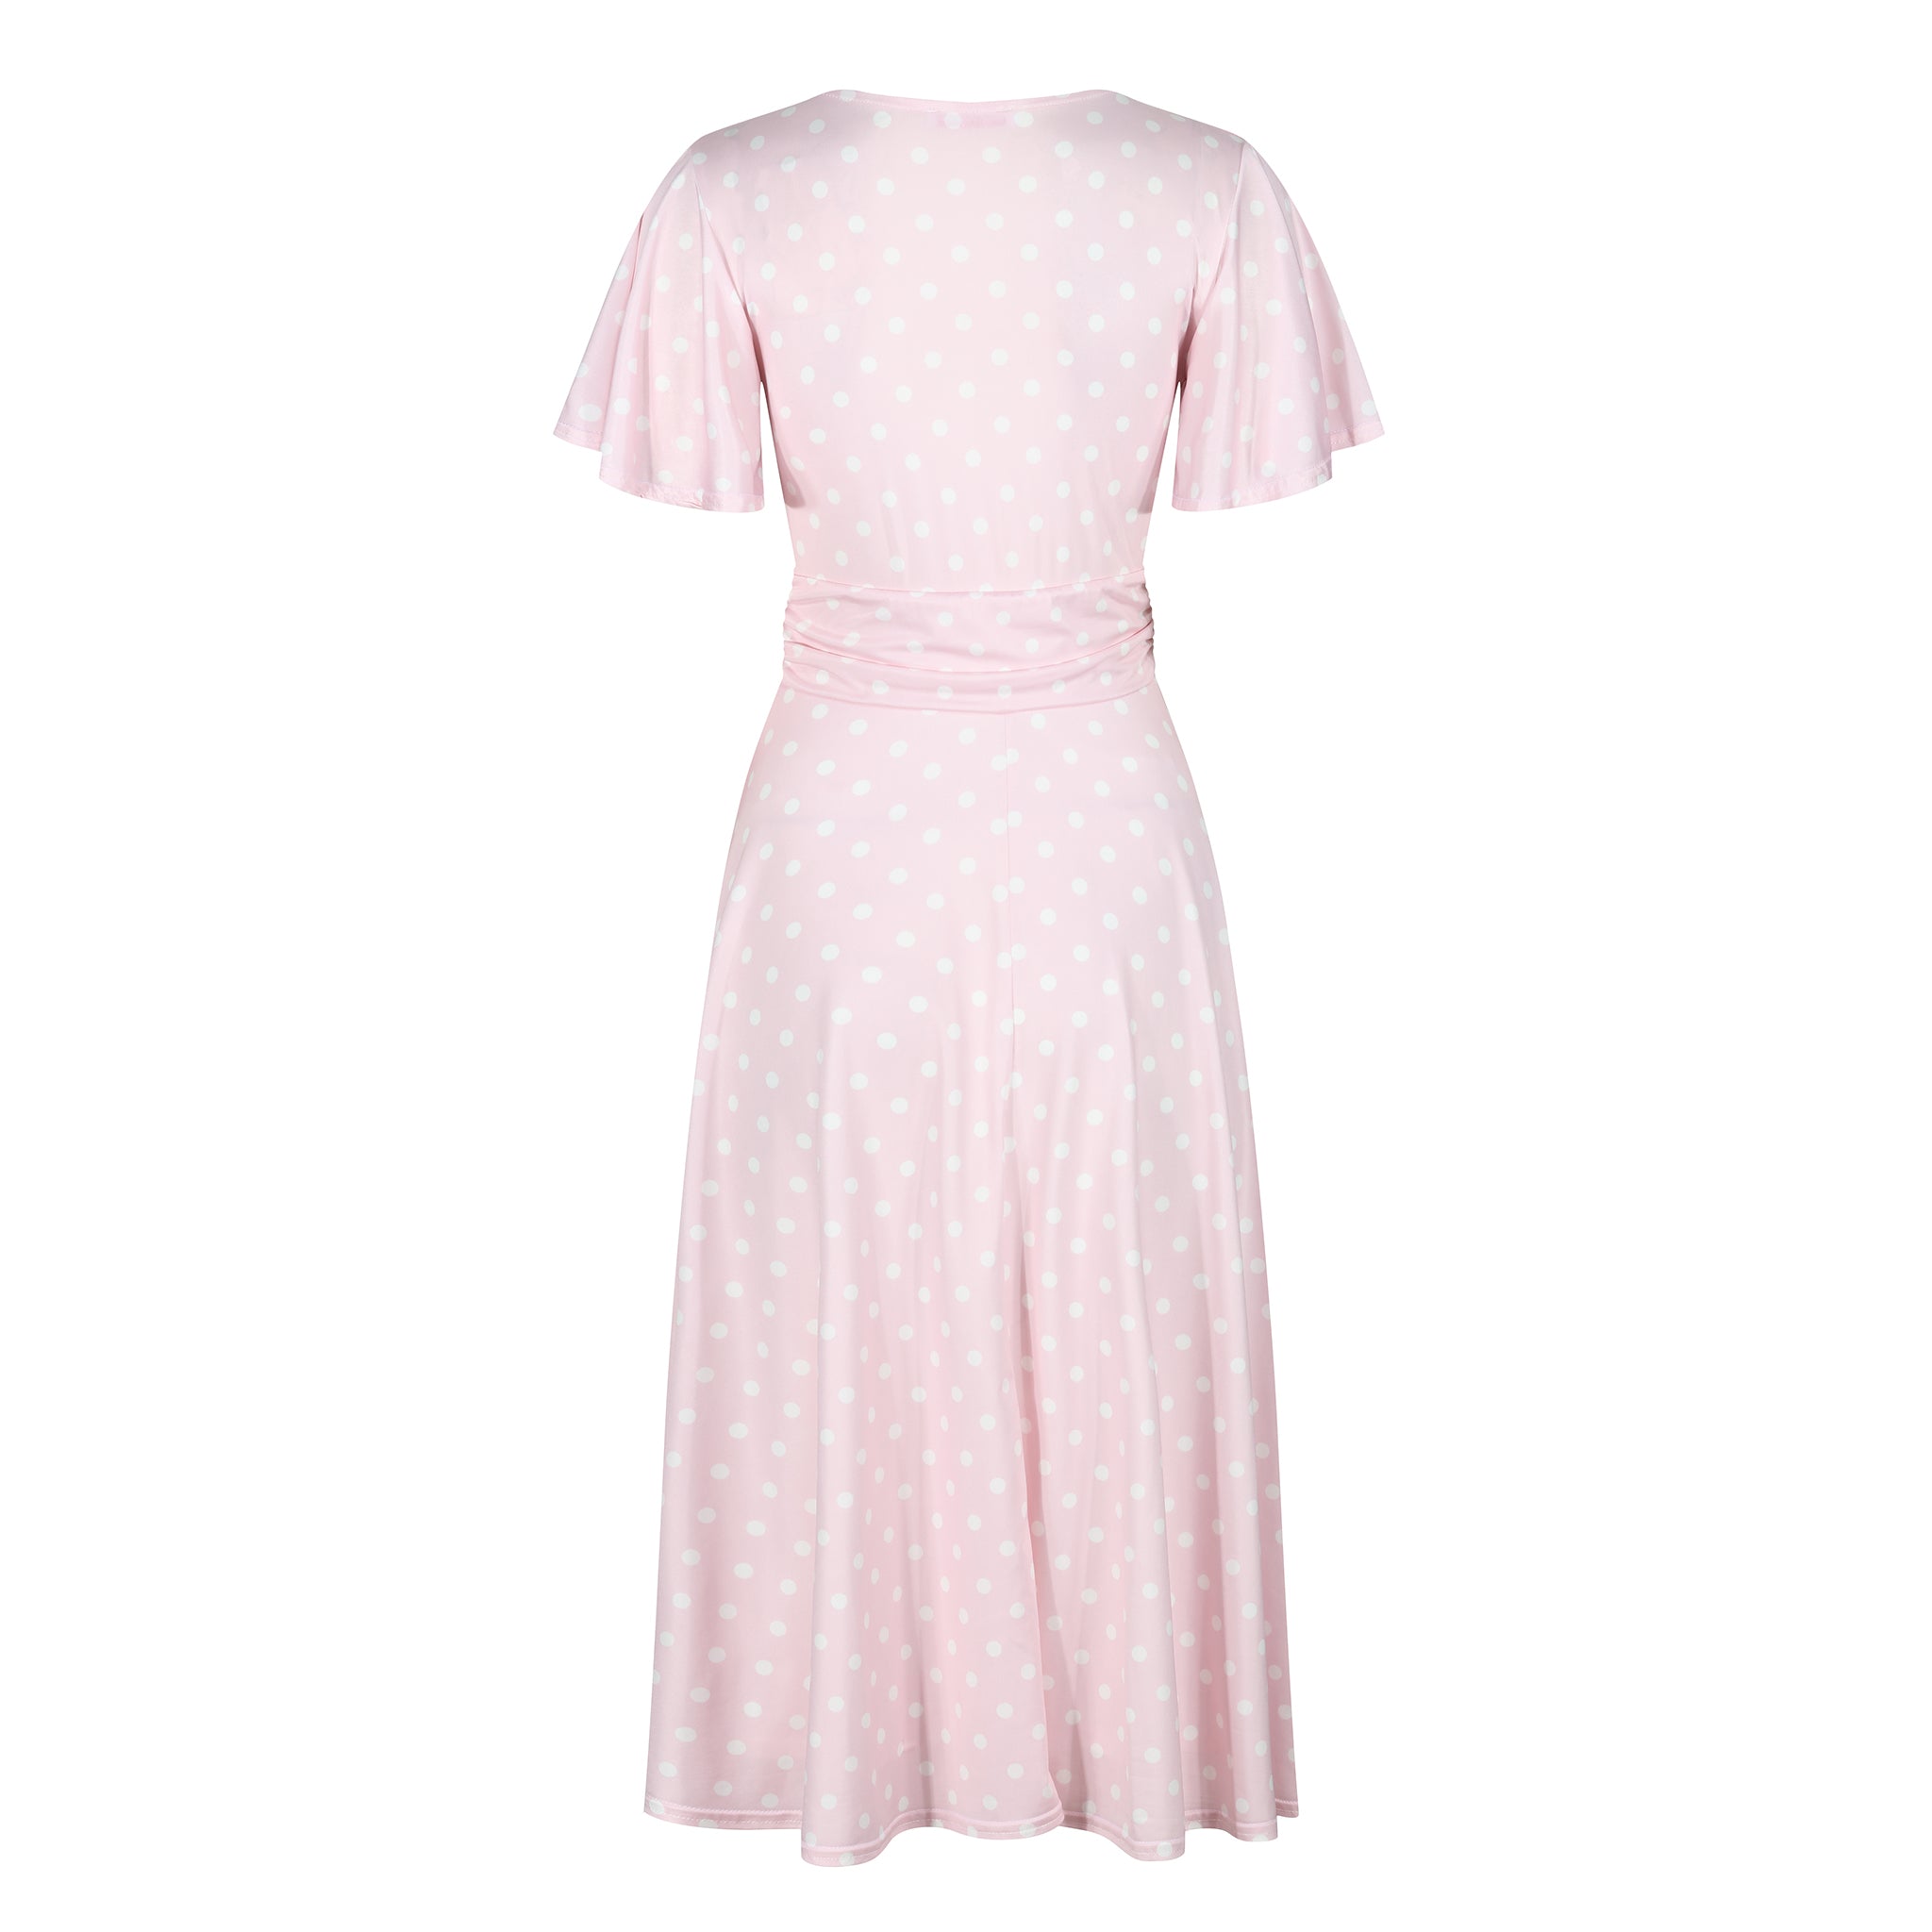 Pale Pink White Polka Dot Waterfall Sleeve Swing Dress